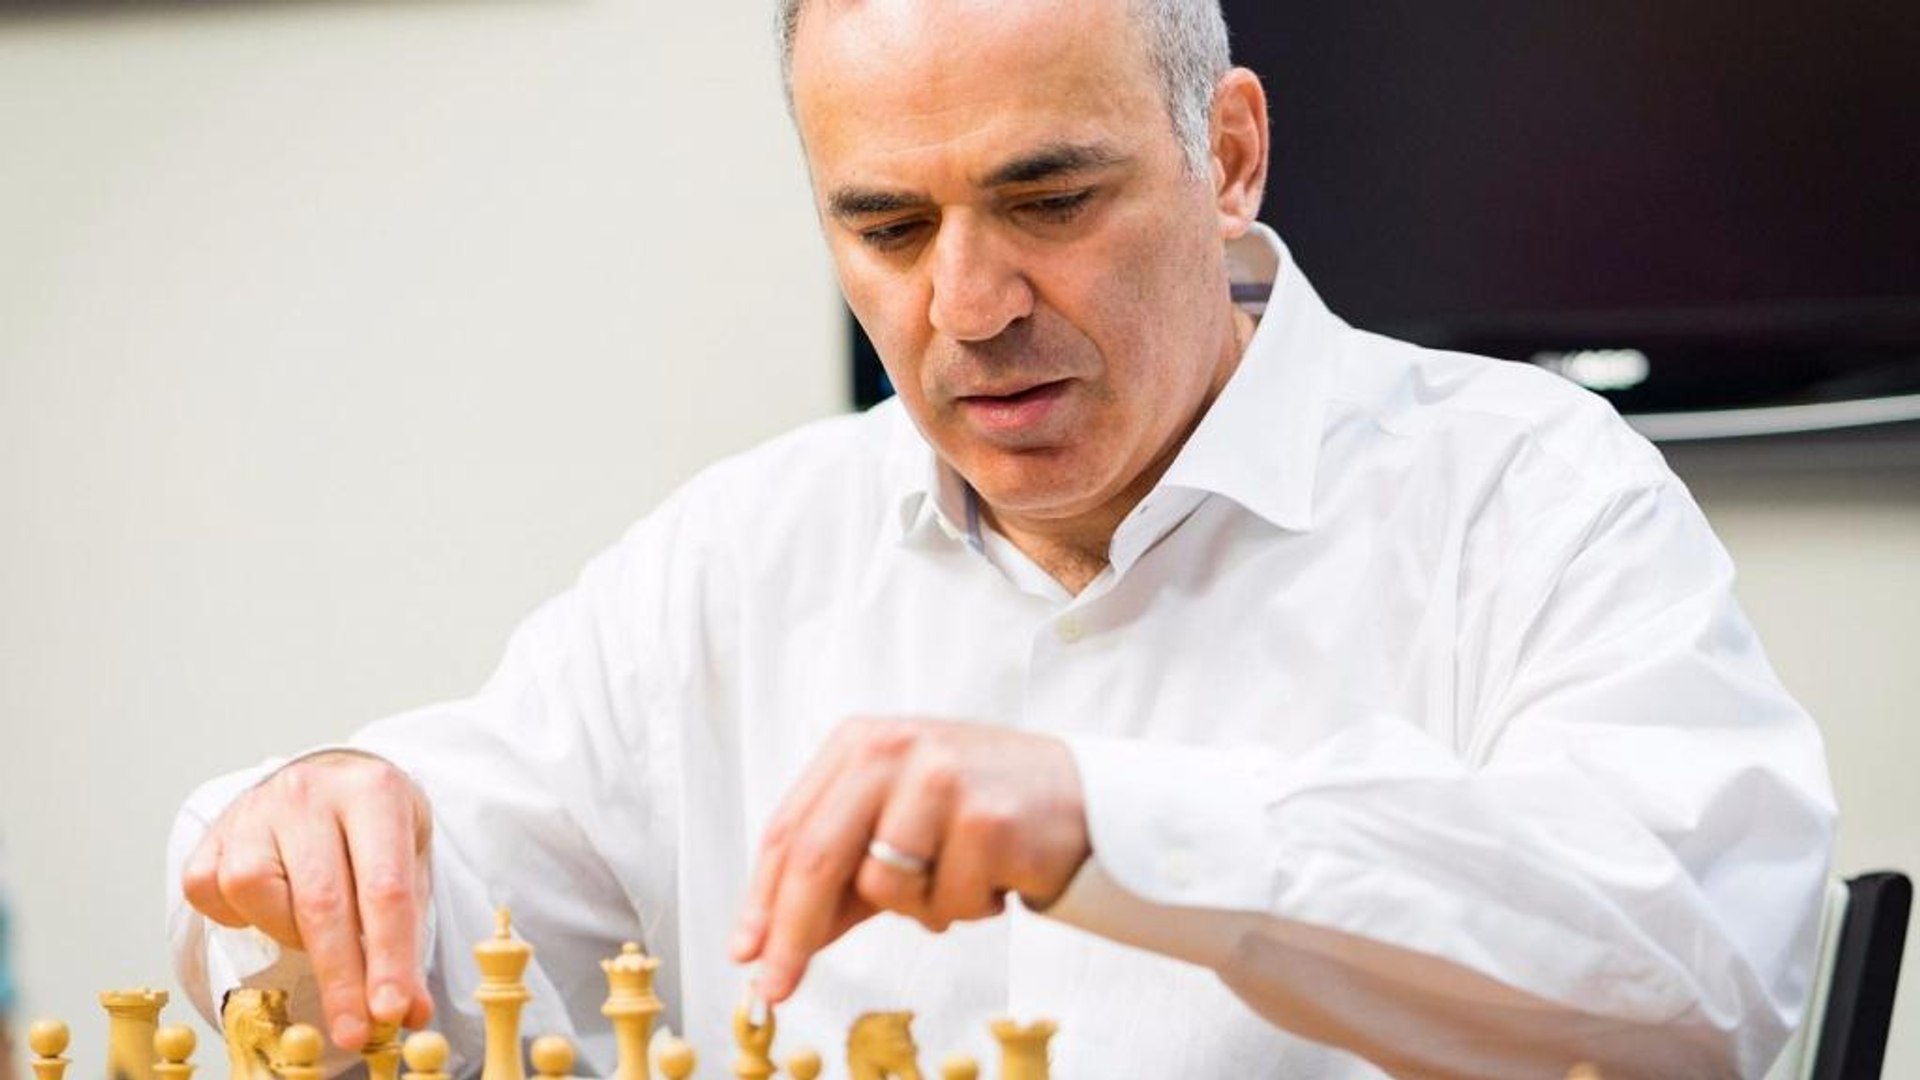 Ícone do xadrez, Kasparov anuncia volta às competições após 12